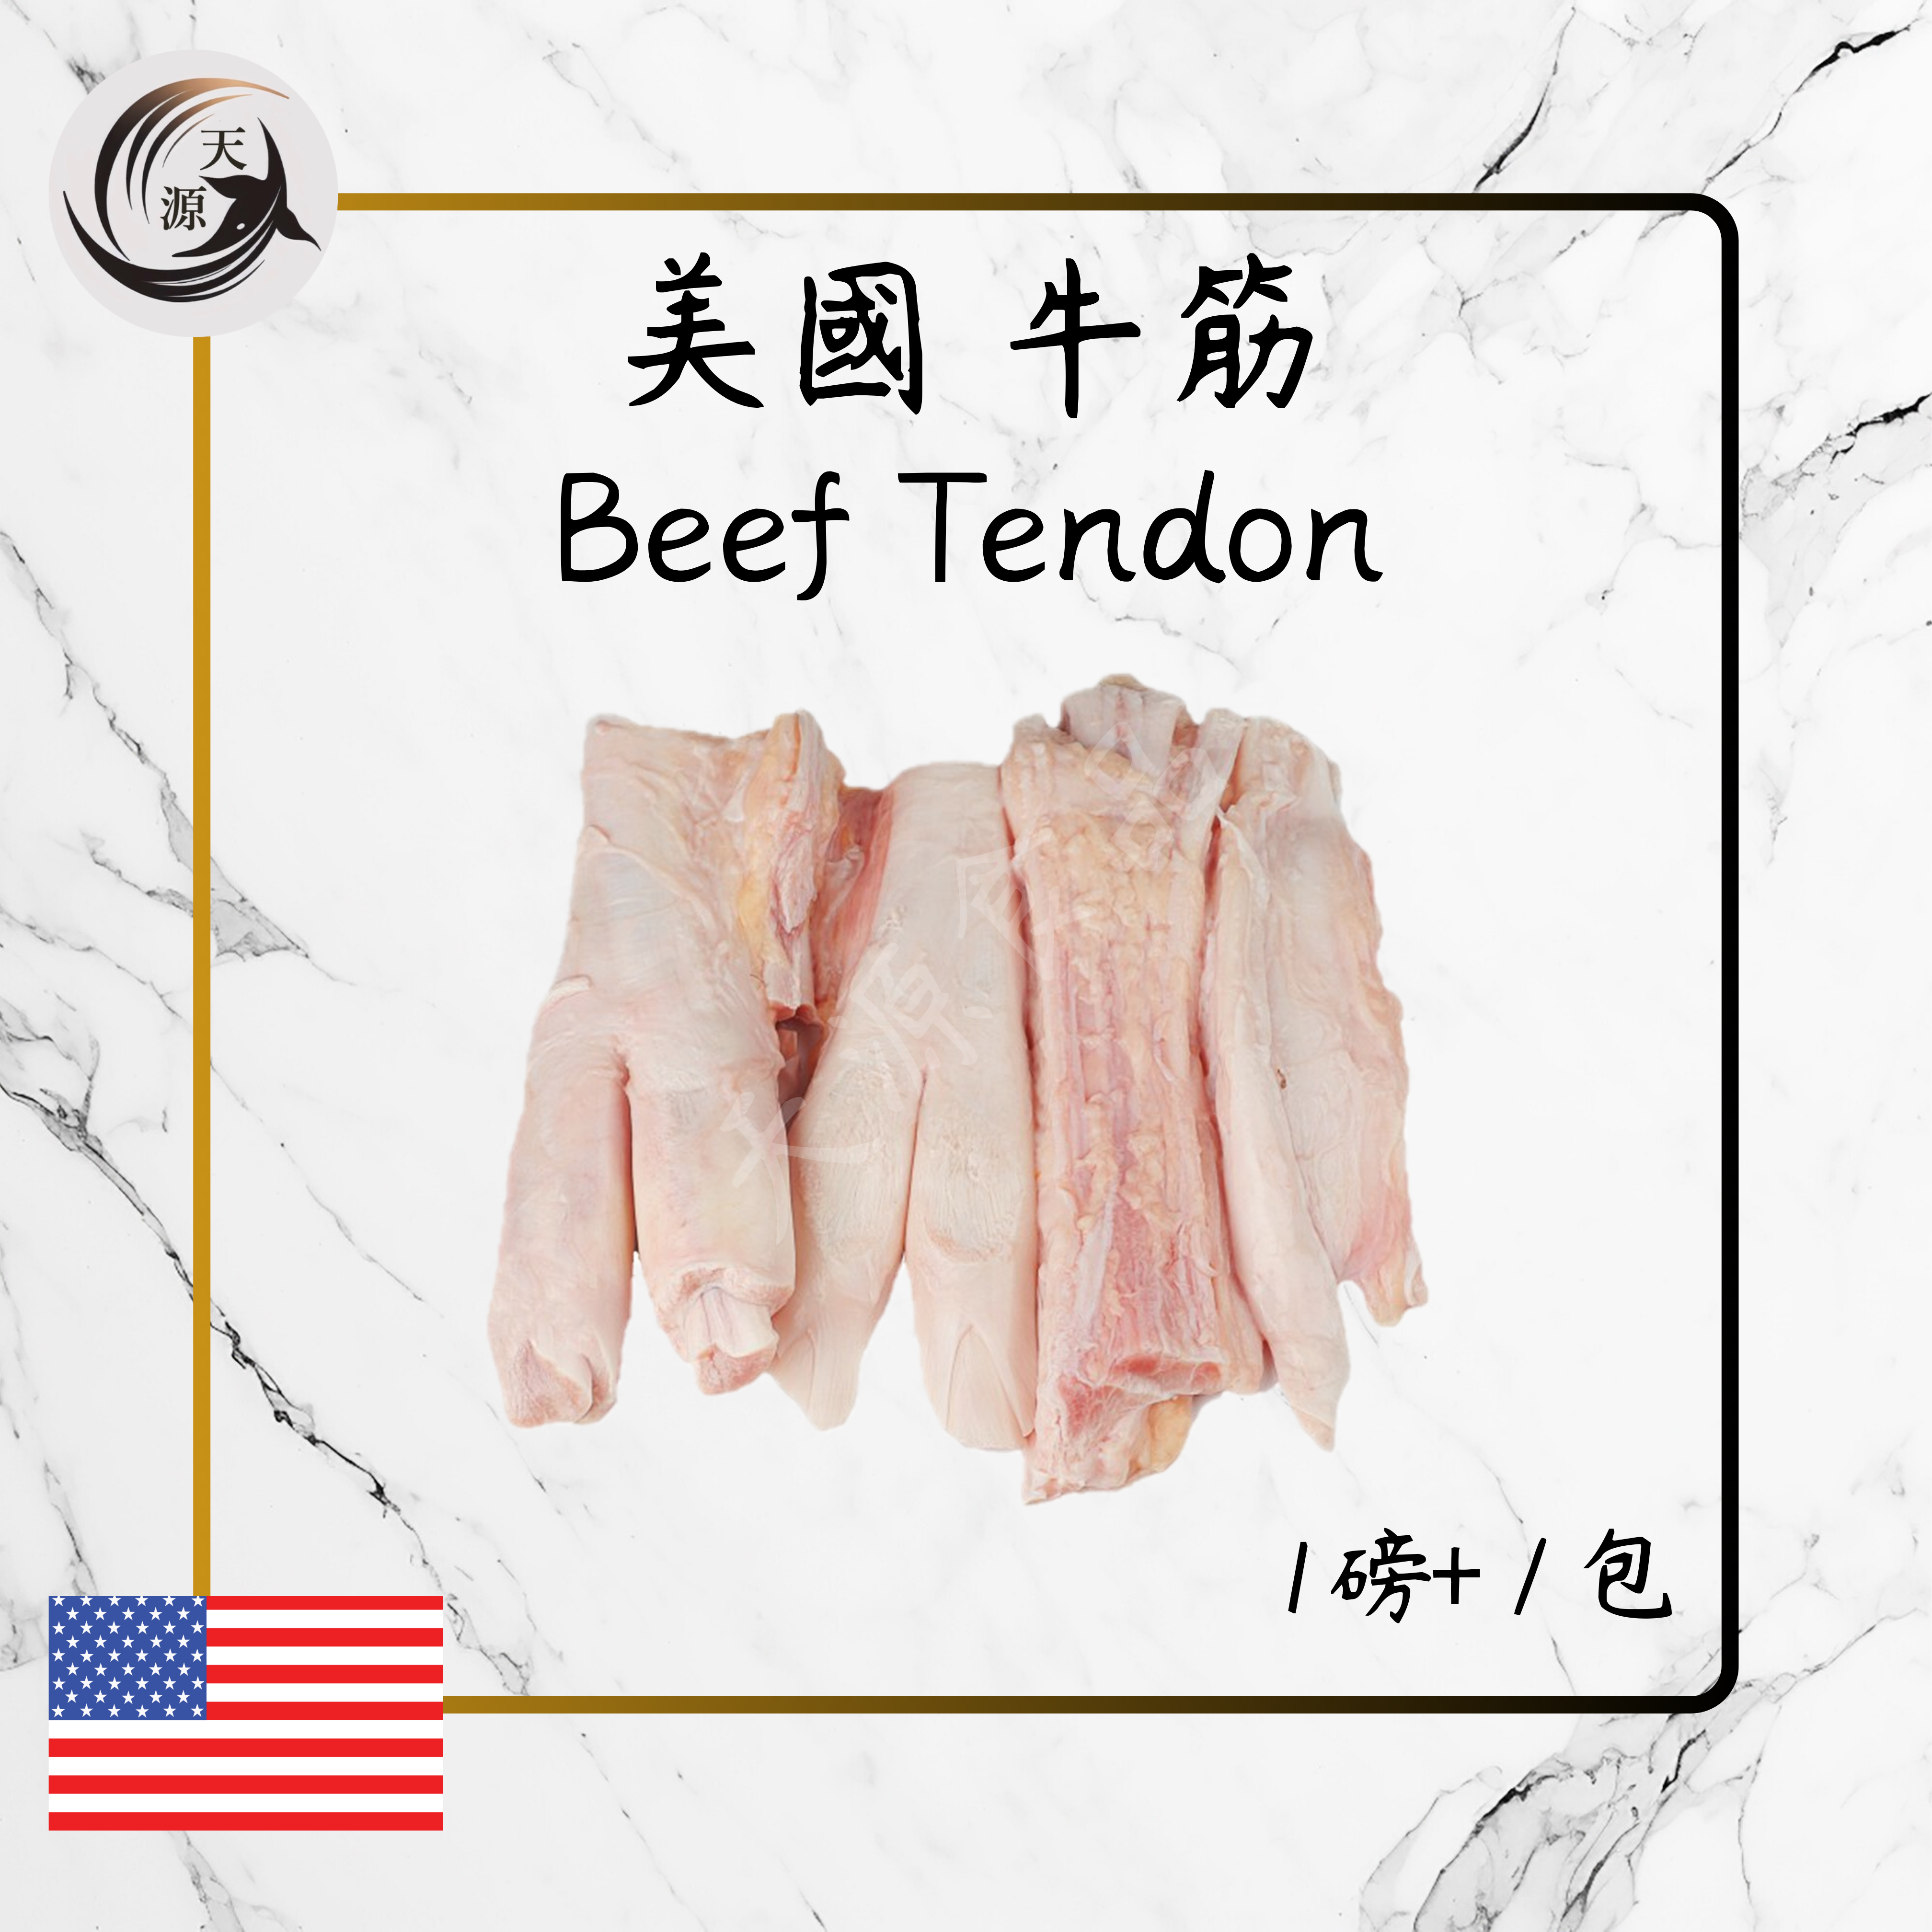 American Beef Tendon